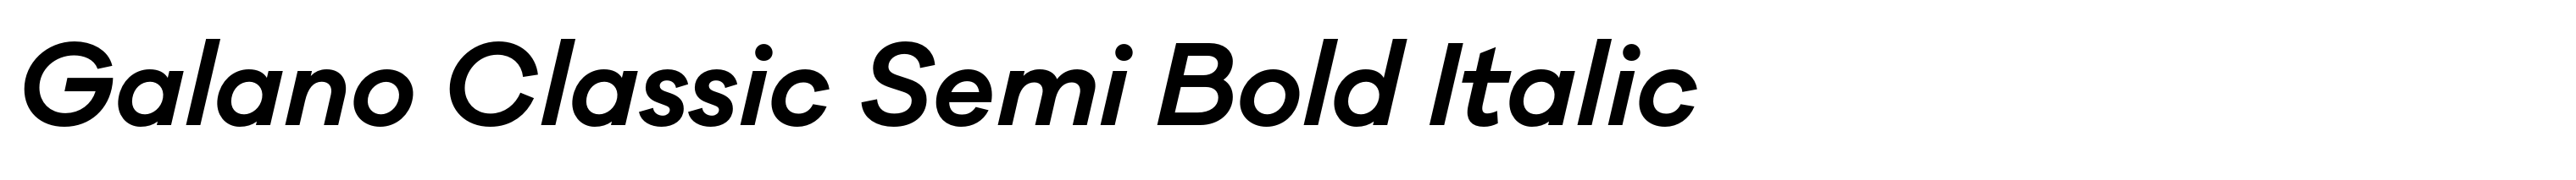 Galano Classic Semi Bold Italic